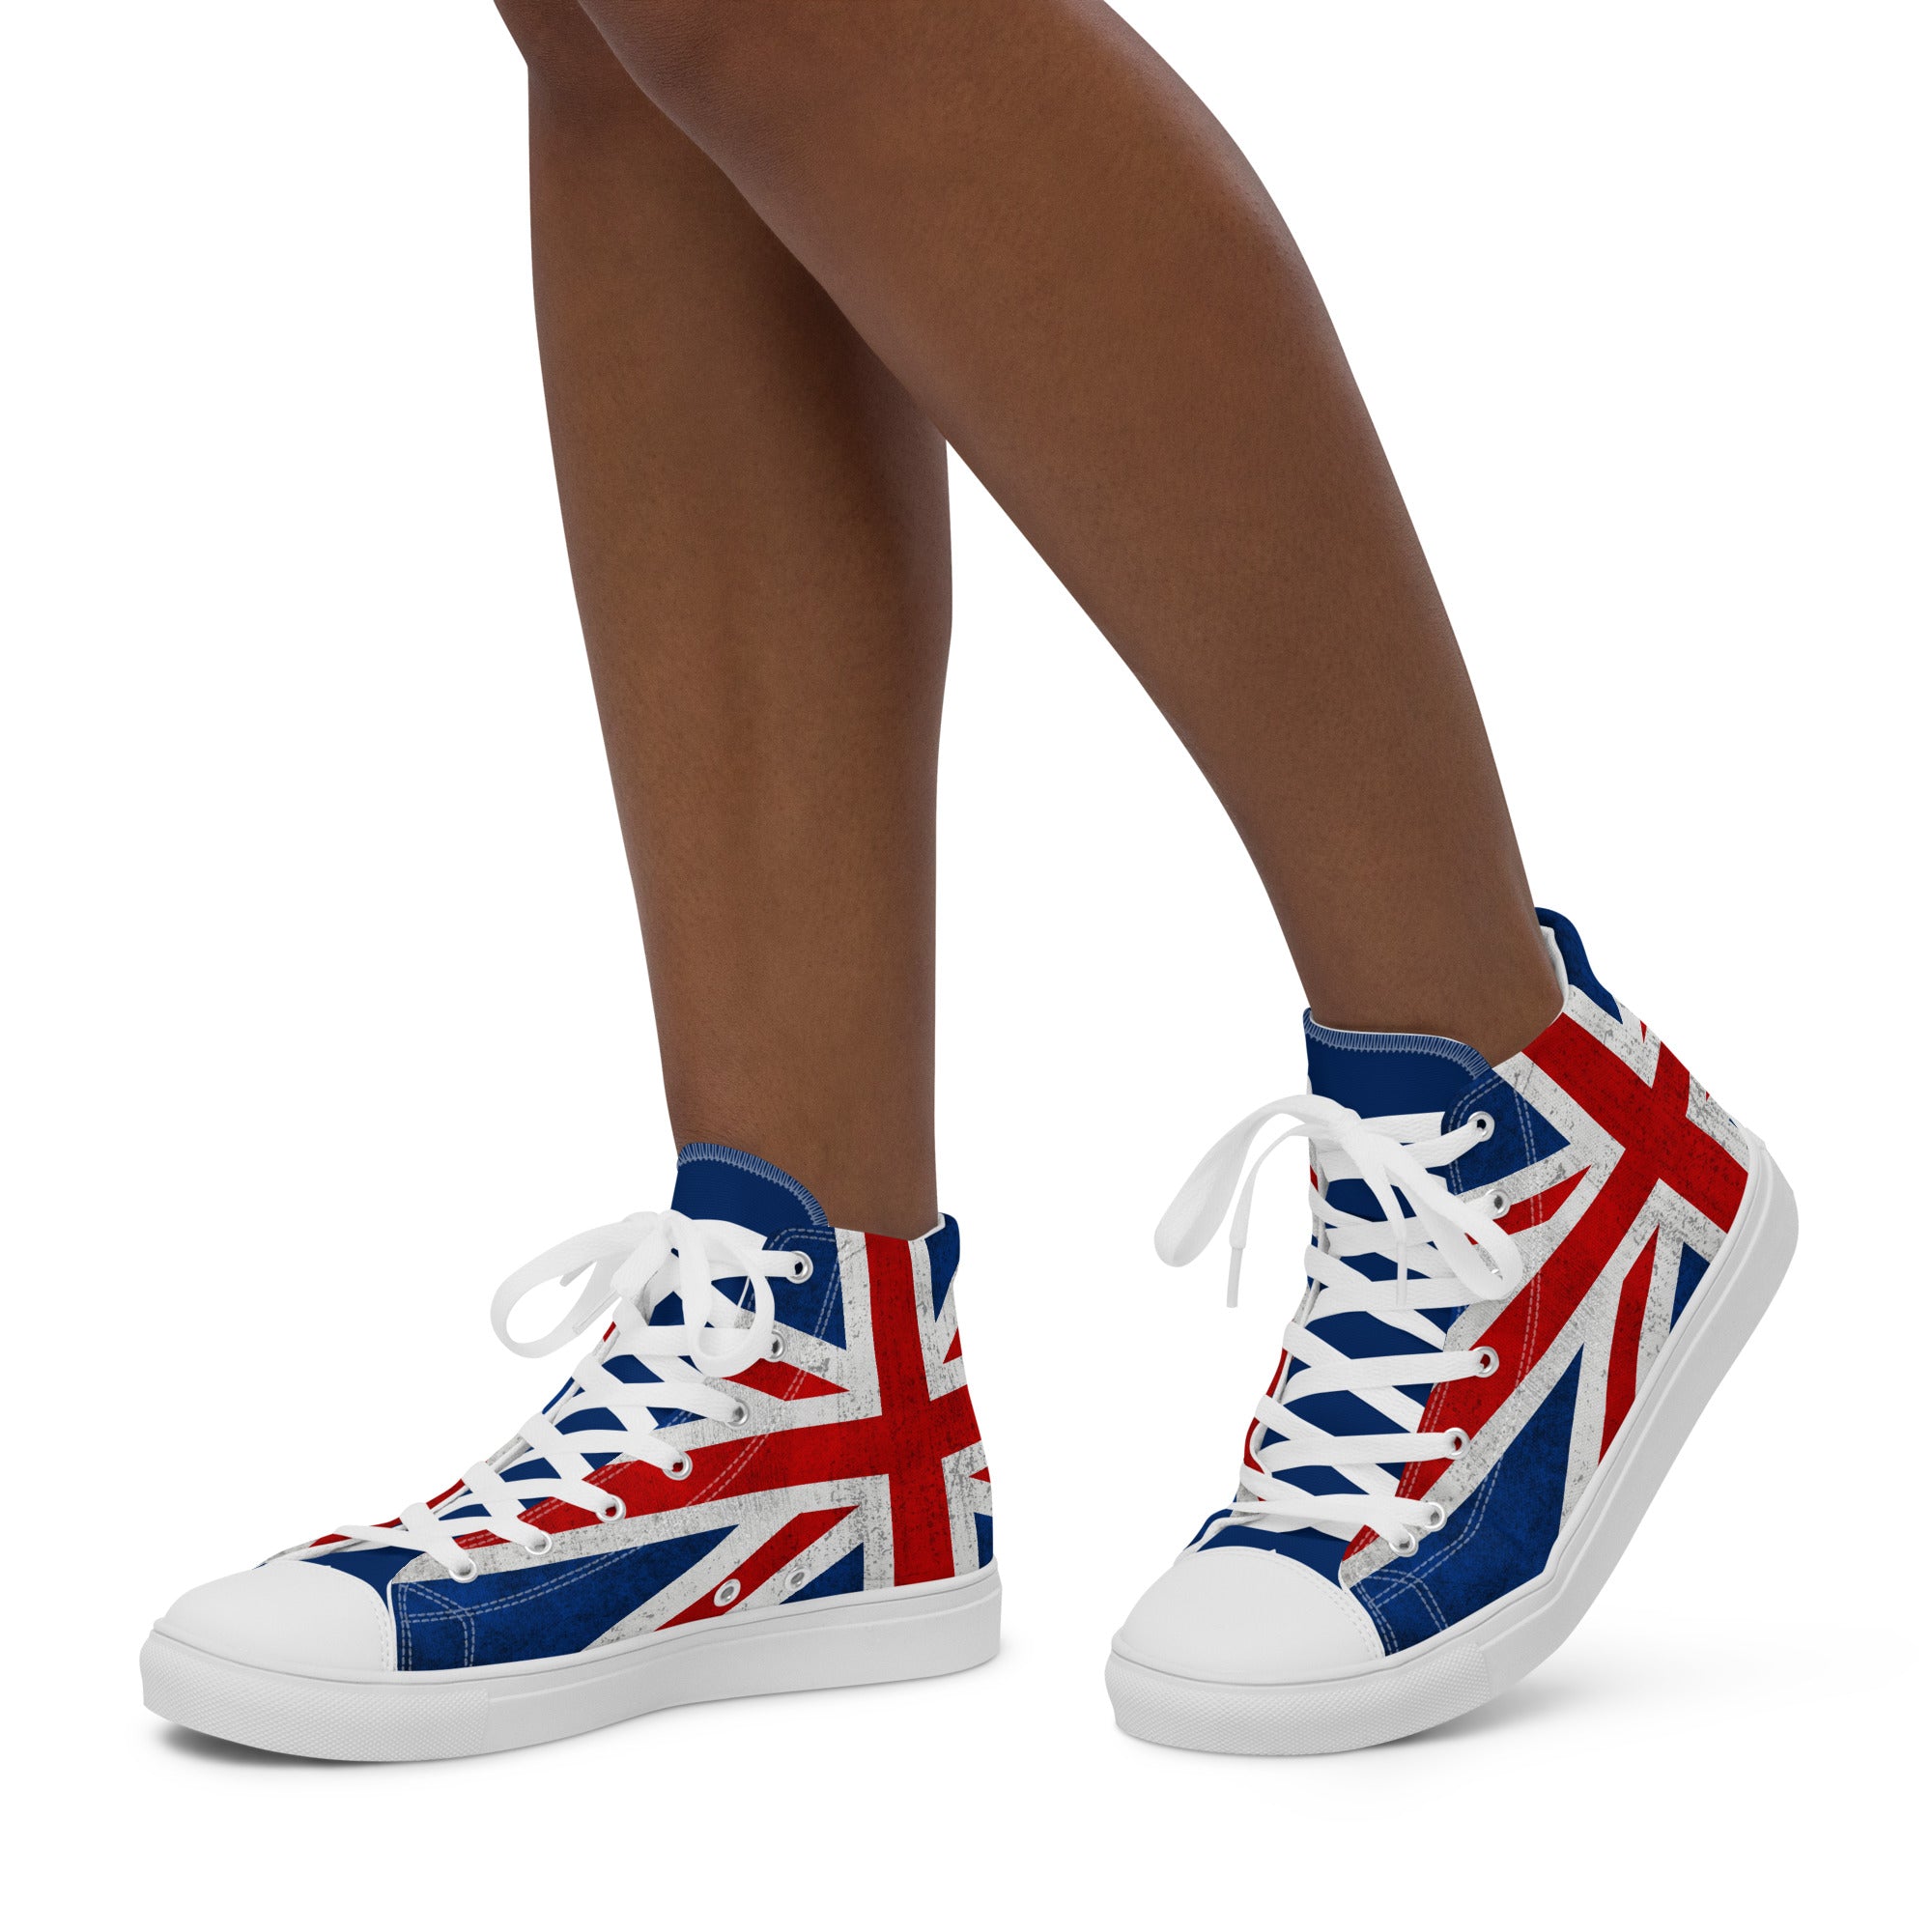 Zapatillas mujer bandera inglesa